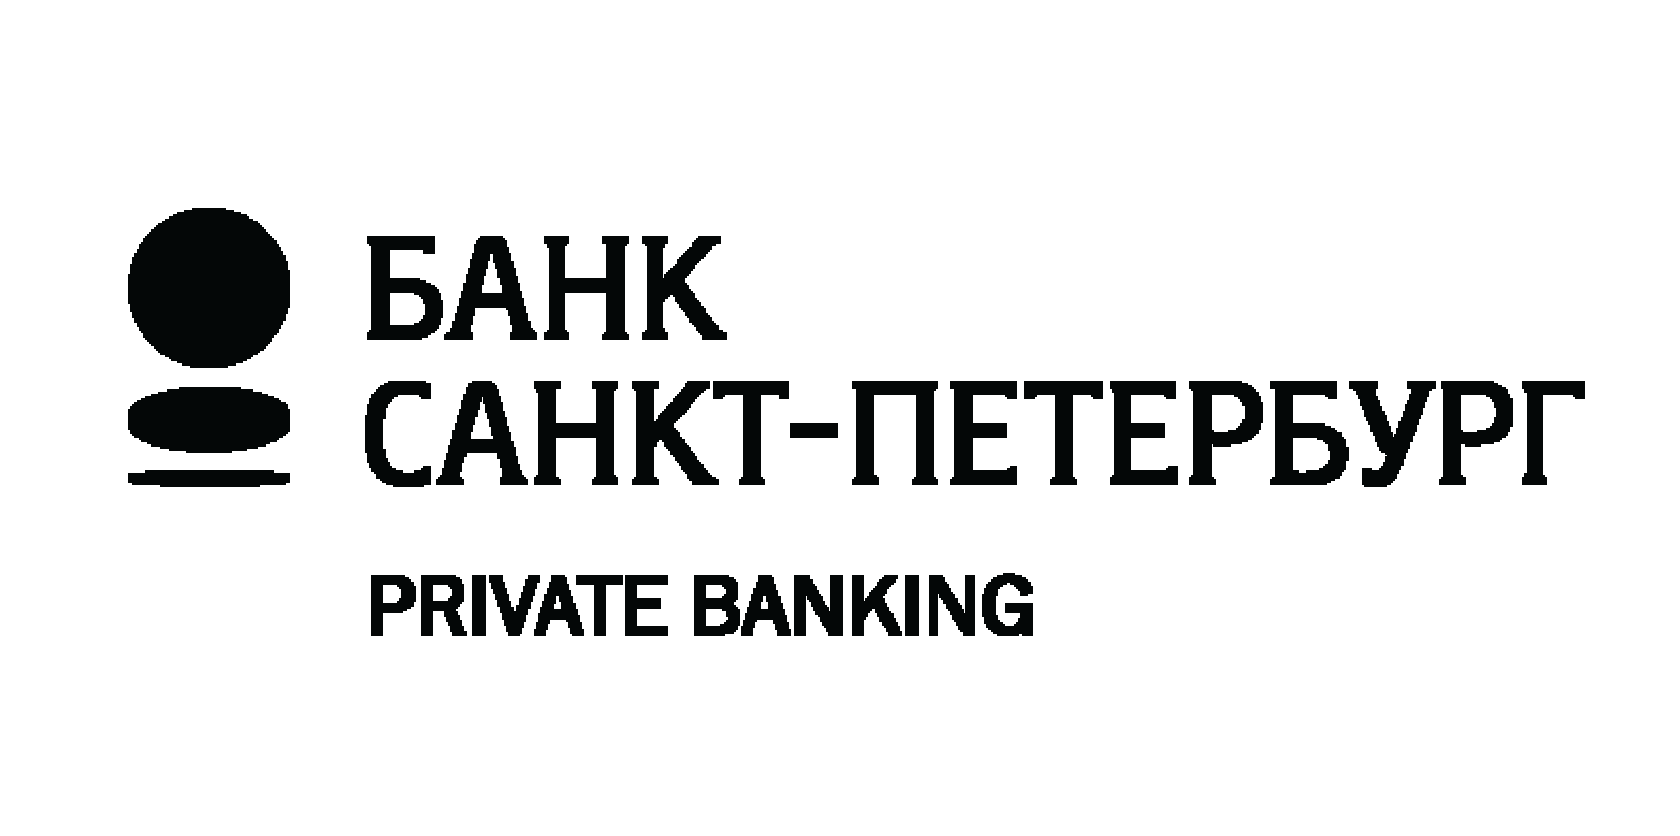 Банк данных санкт петербург. Банк Санкт-Петербург. Банк Санкт-Петербург эмблема. Лого банка Санкт Петербург. ПАО банк Санкт-Петербург логотип.